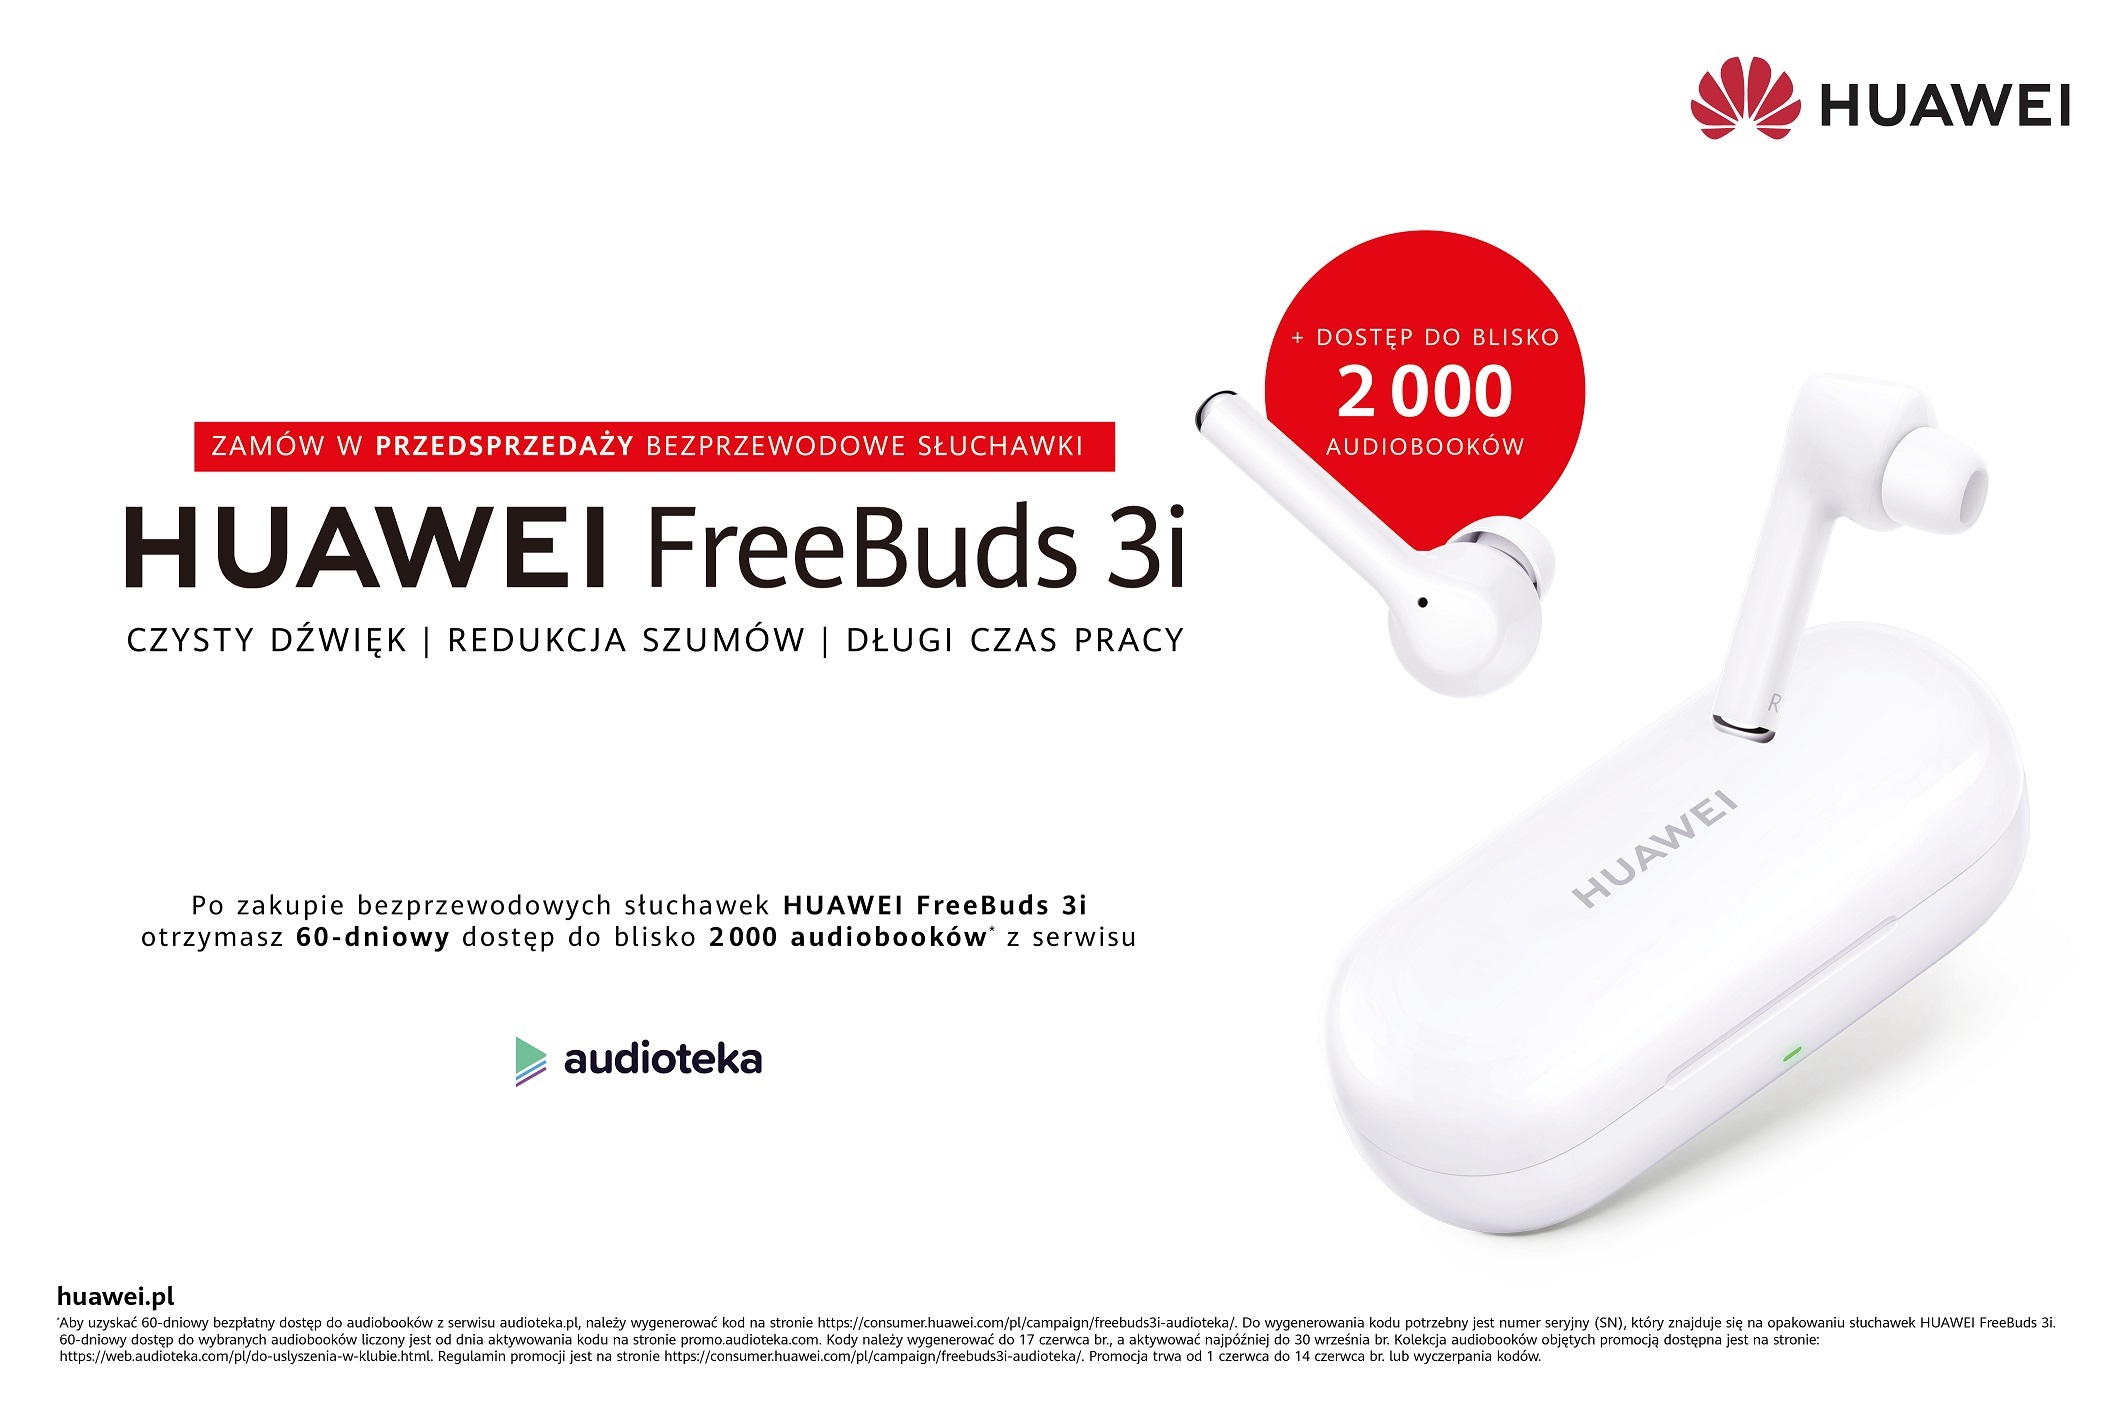 Huawei FreeBuds 3i TWS earbuds pre-order